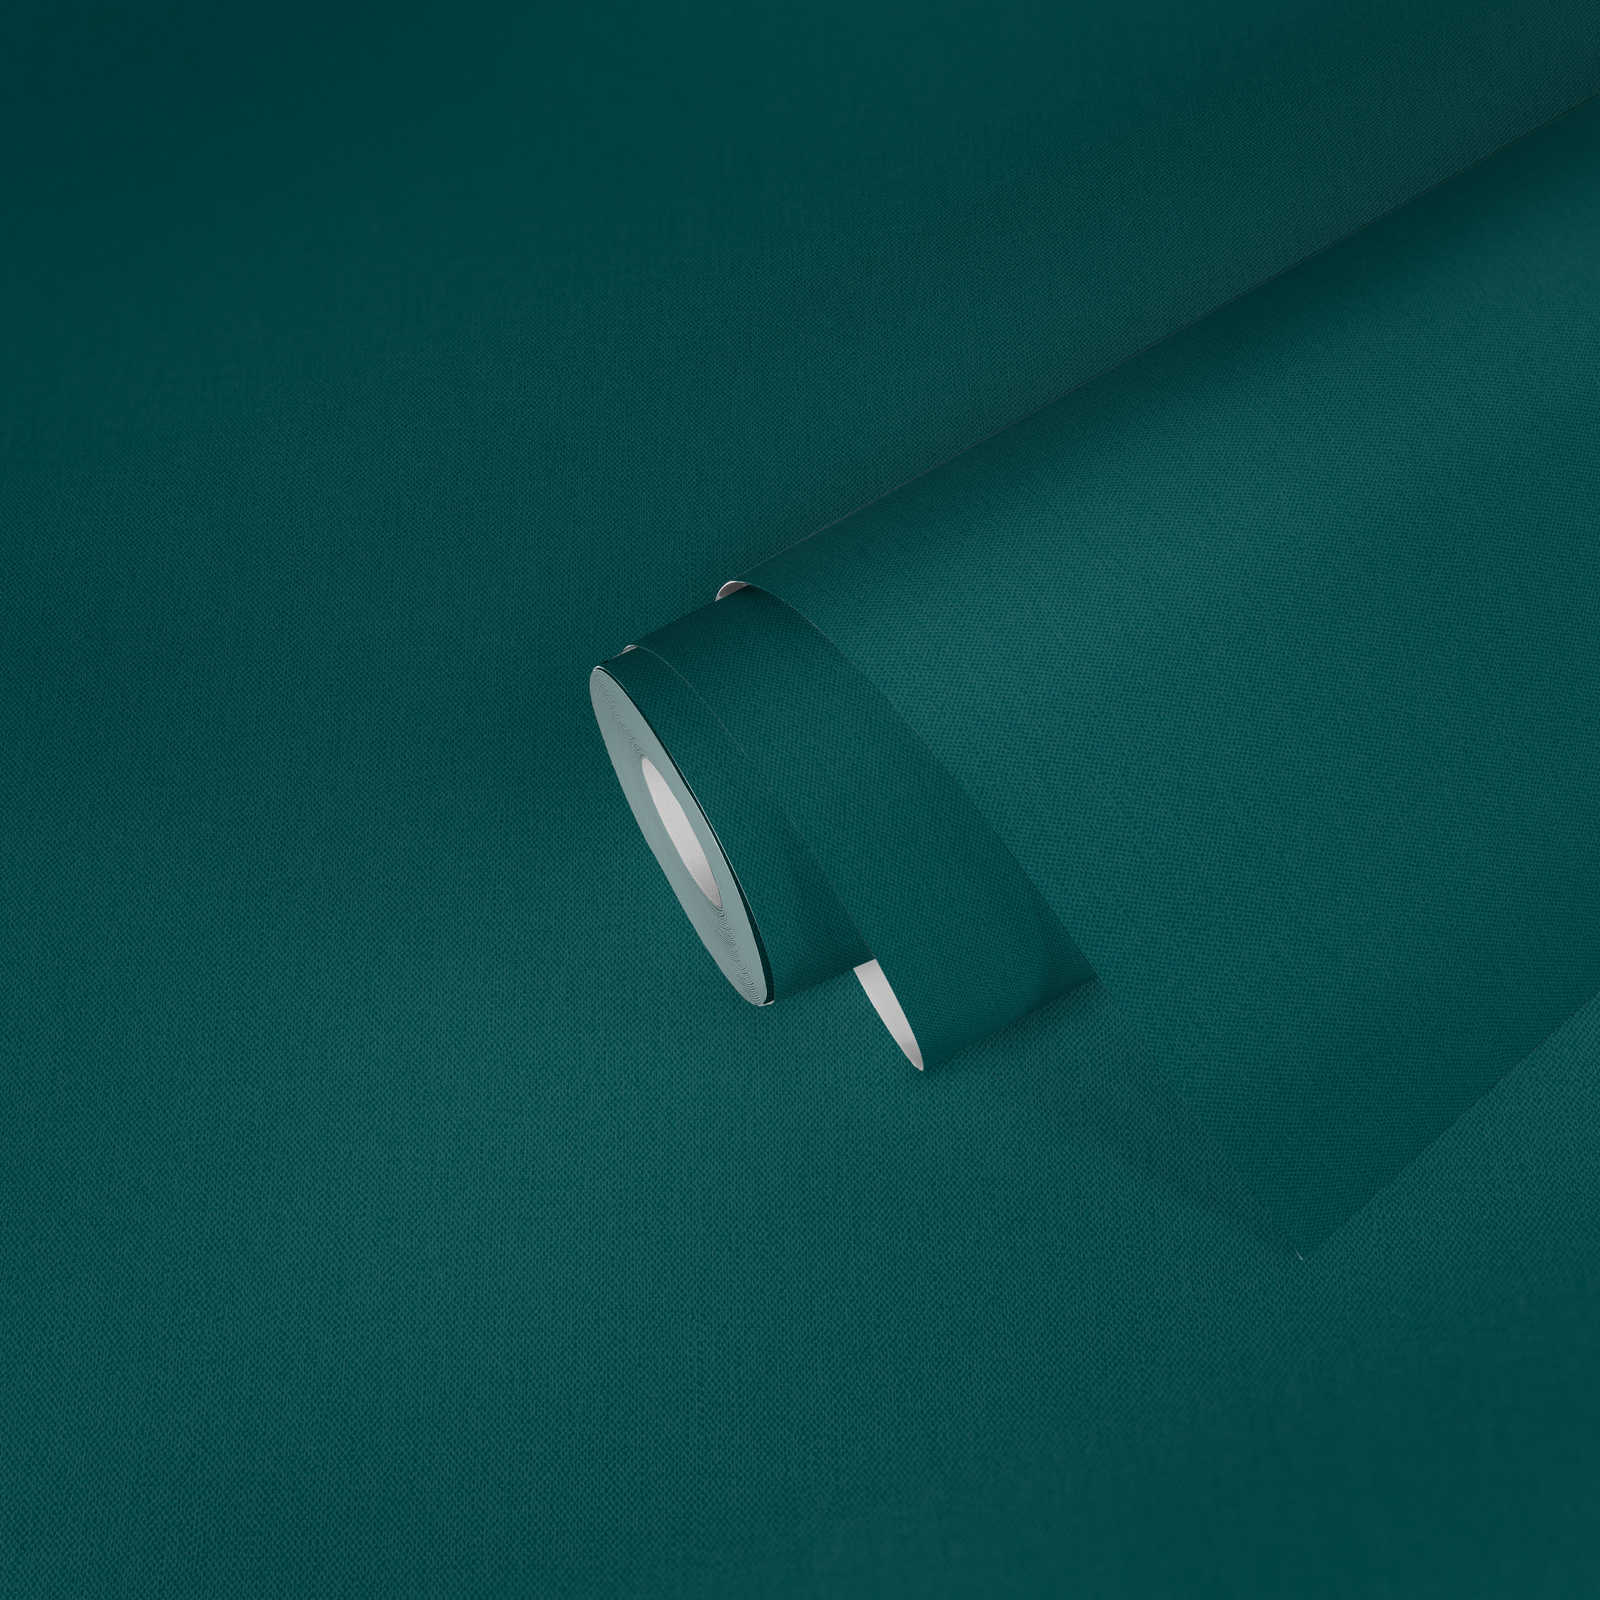             wallpaper dark green with textile texture matte plain water blue
        